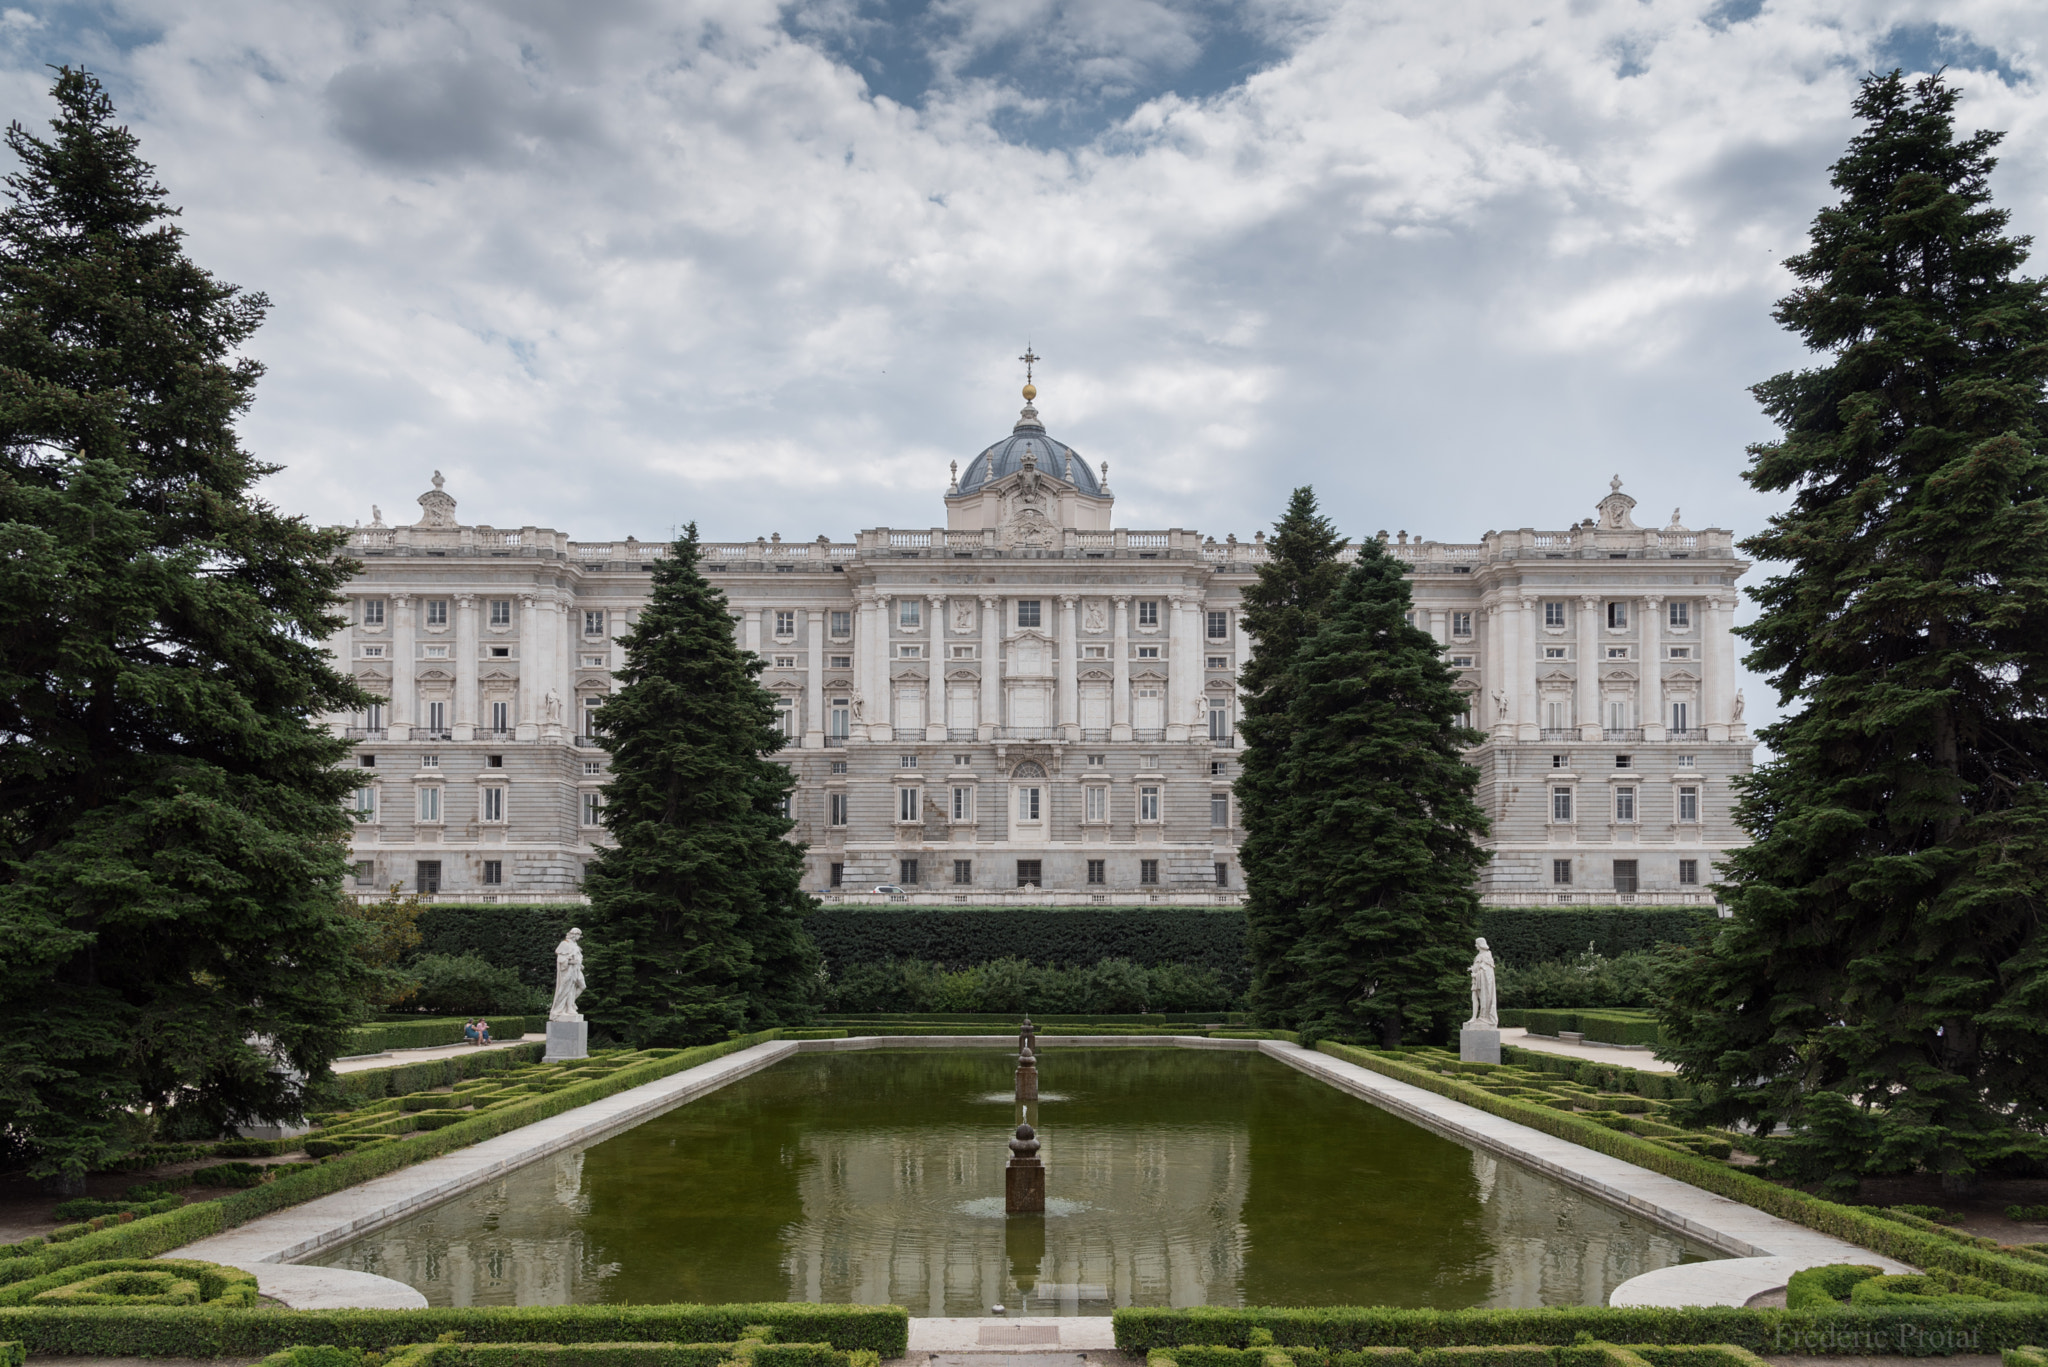 Royal Palace from the Sabatini Gardens